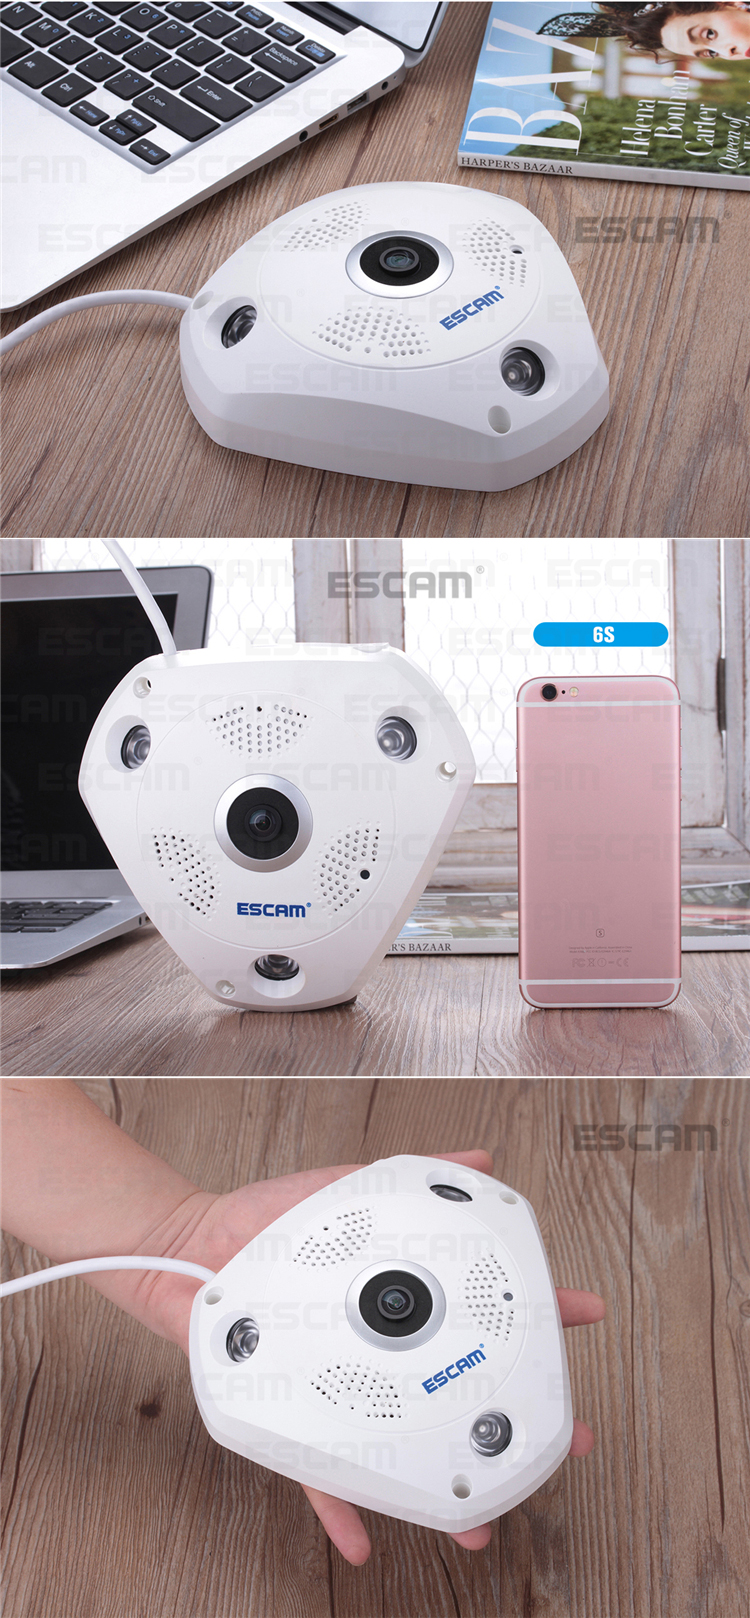 ESCAM Fisheye Camera Support VR QP180 Shark 960P IP WiFi Camera 1.3MP 360 Degree Panoramic Infrared Night Vision Camera 79